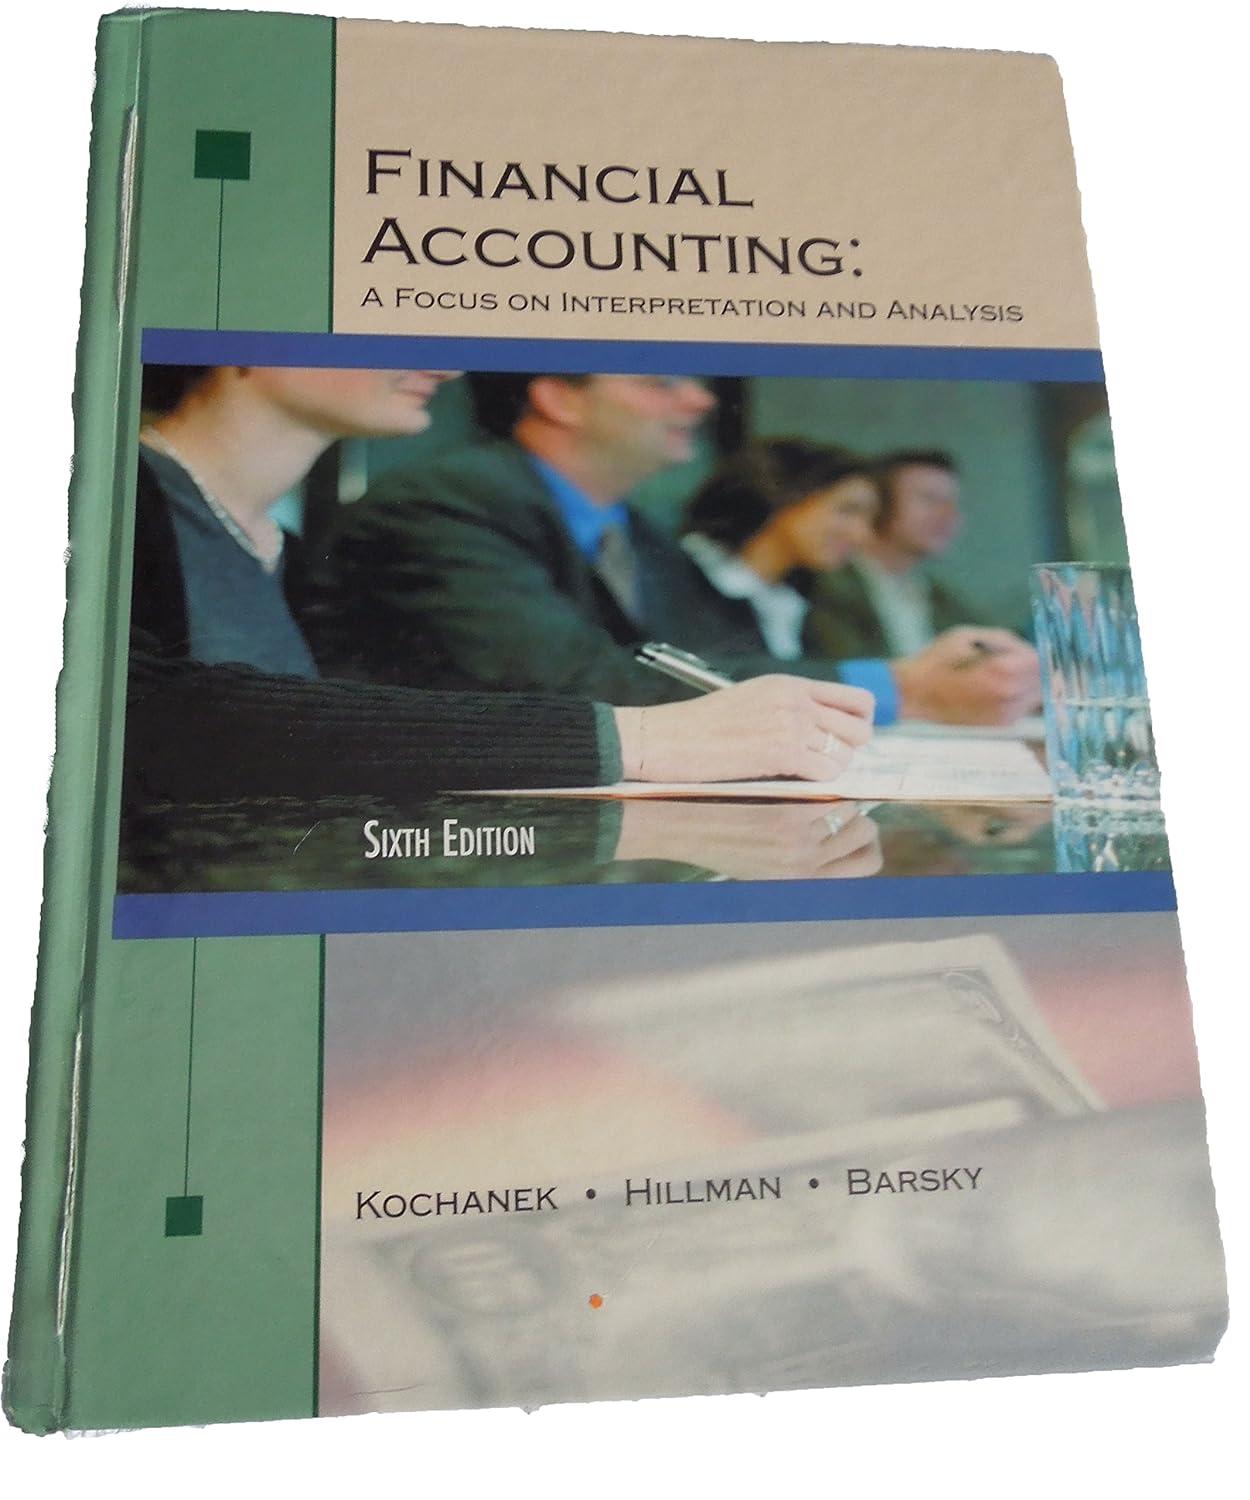 financial accounting a focus on interpretation and analysis 6th edition richard f. kochanek, douglas hillman,